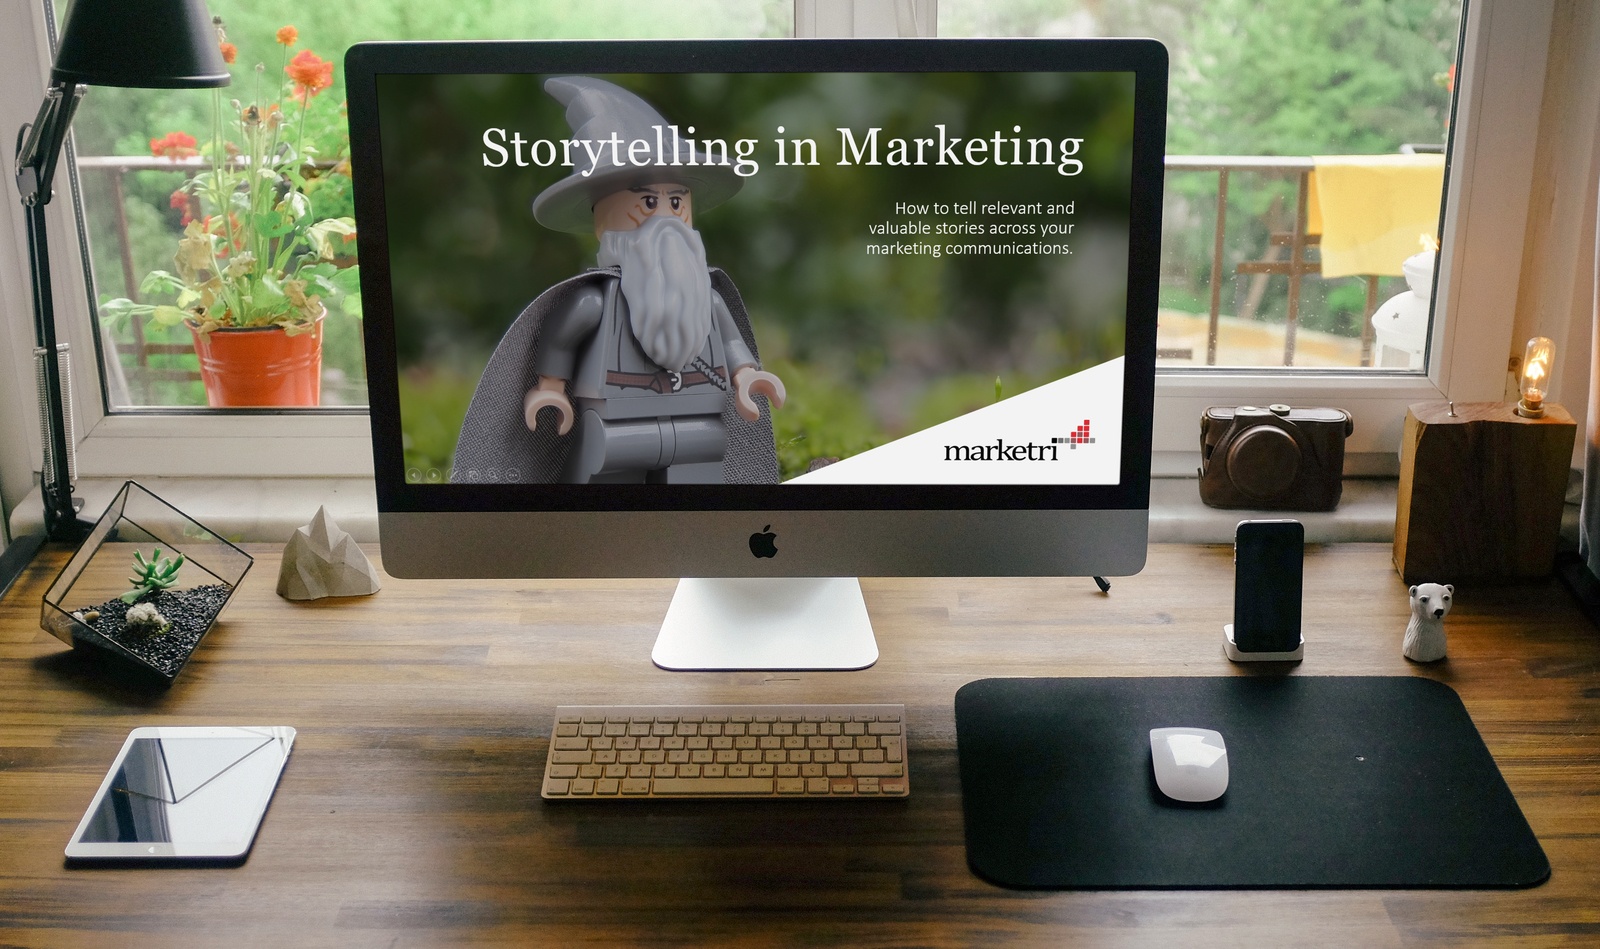 Storytelling in Marketing Home Office.jpg